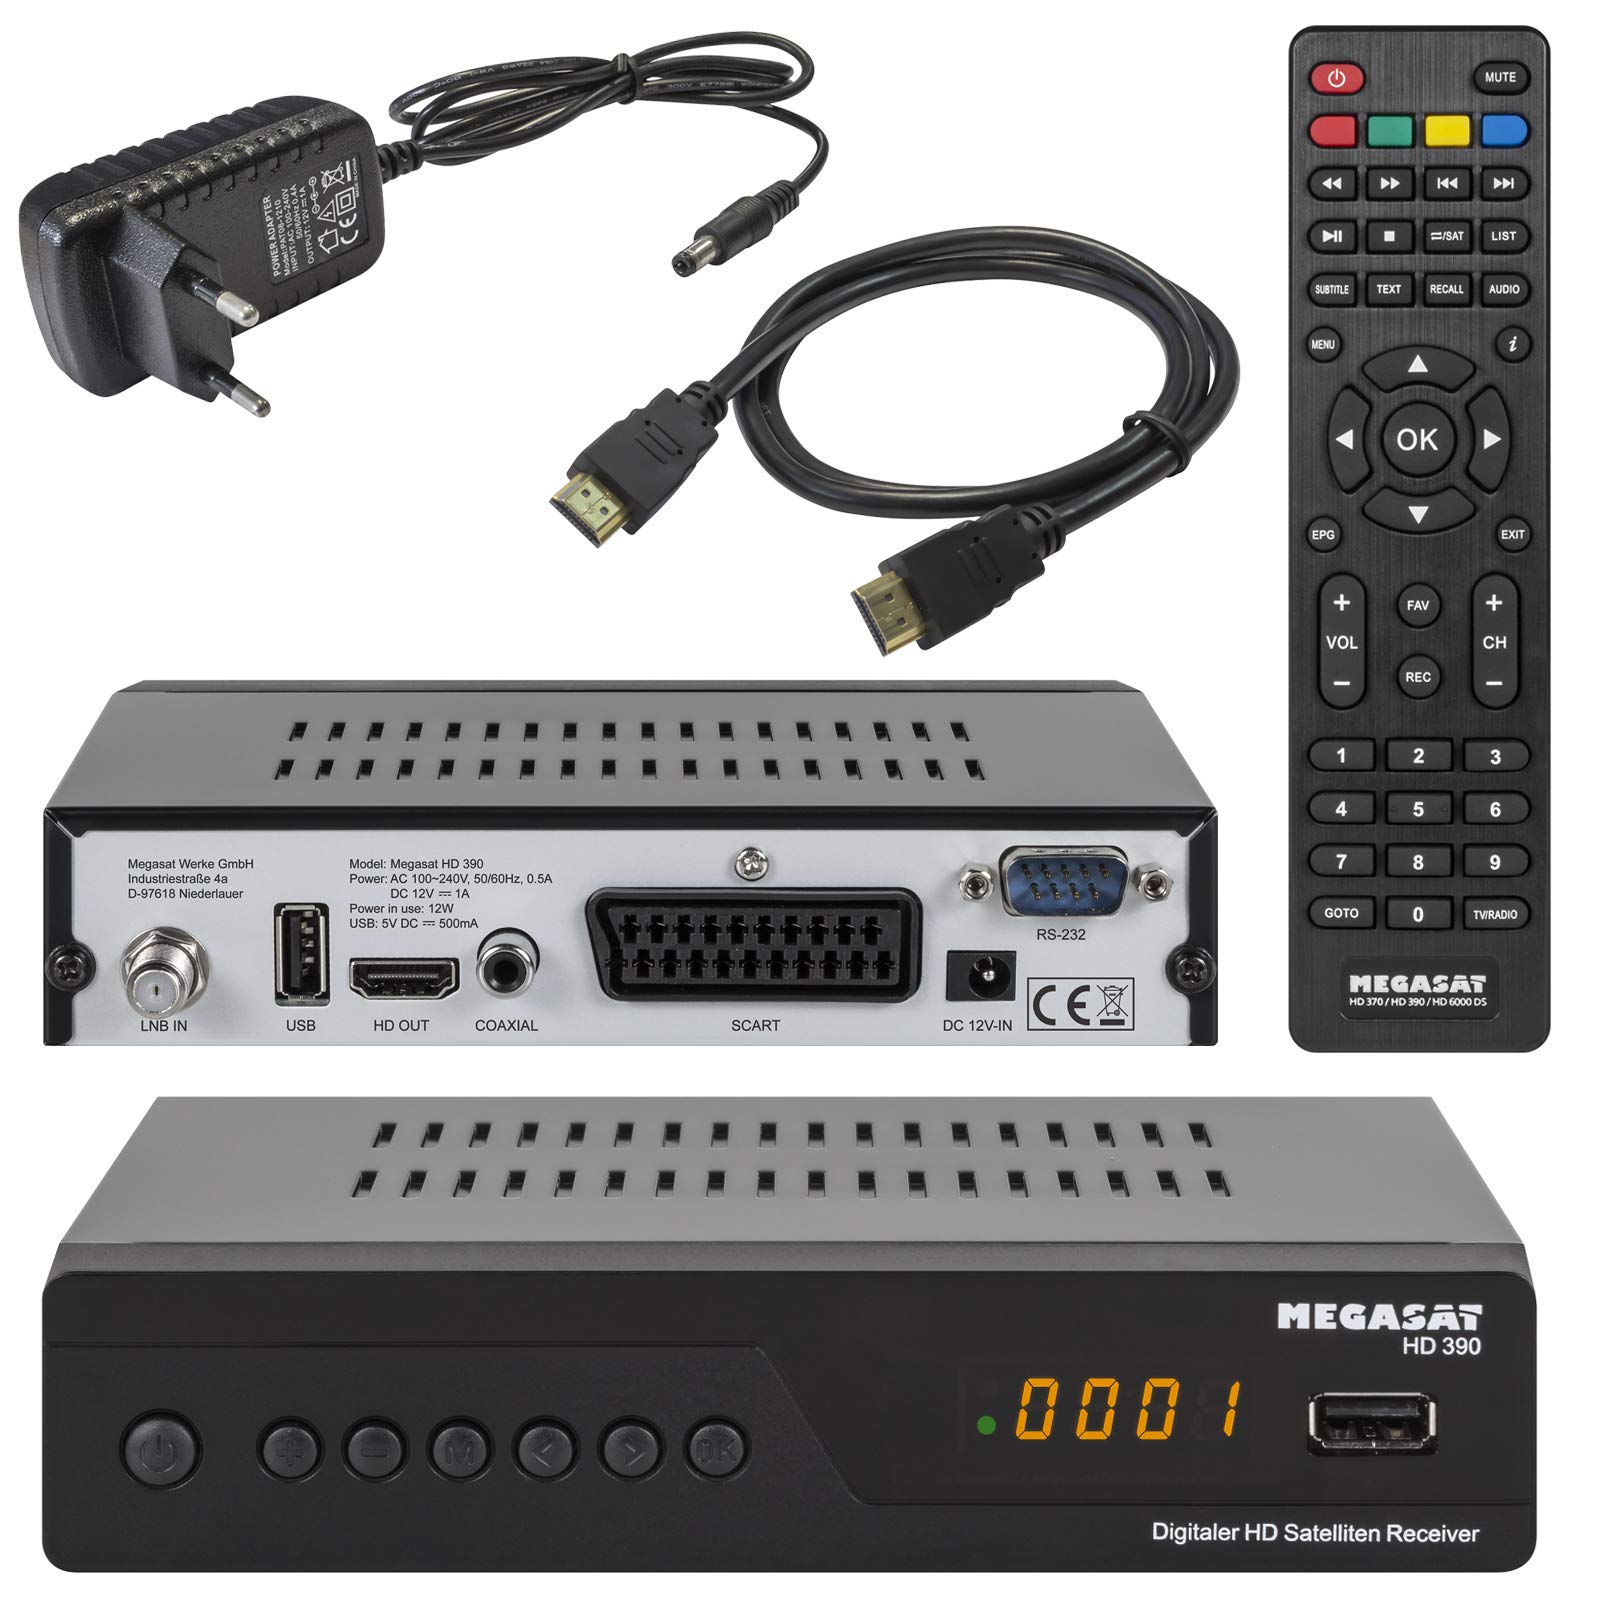 Megasat HD 390 HD SAT Receiver (HDTV, DVB-S2, HDMI, 1080p, SCART, USB Mediaplayer, Full HD, Astra vorinstalliert) inkl HDMI Kabel